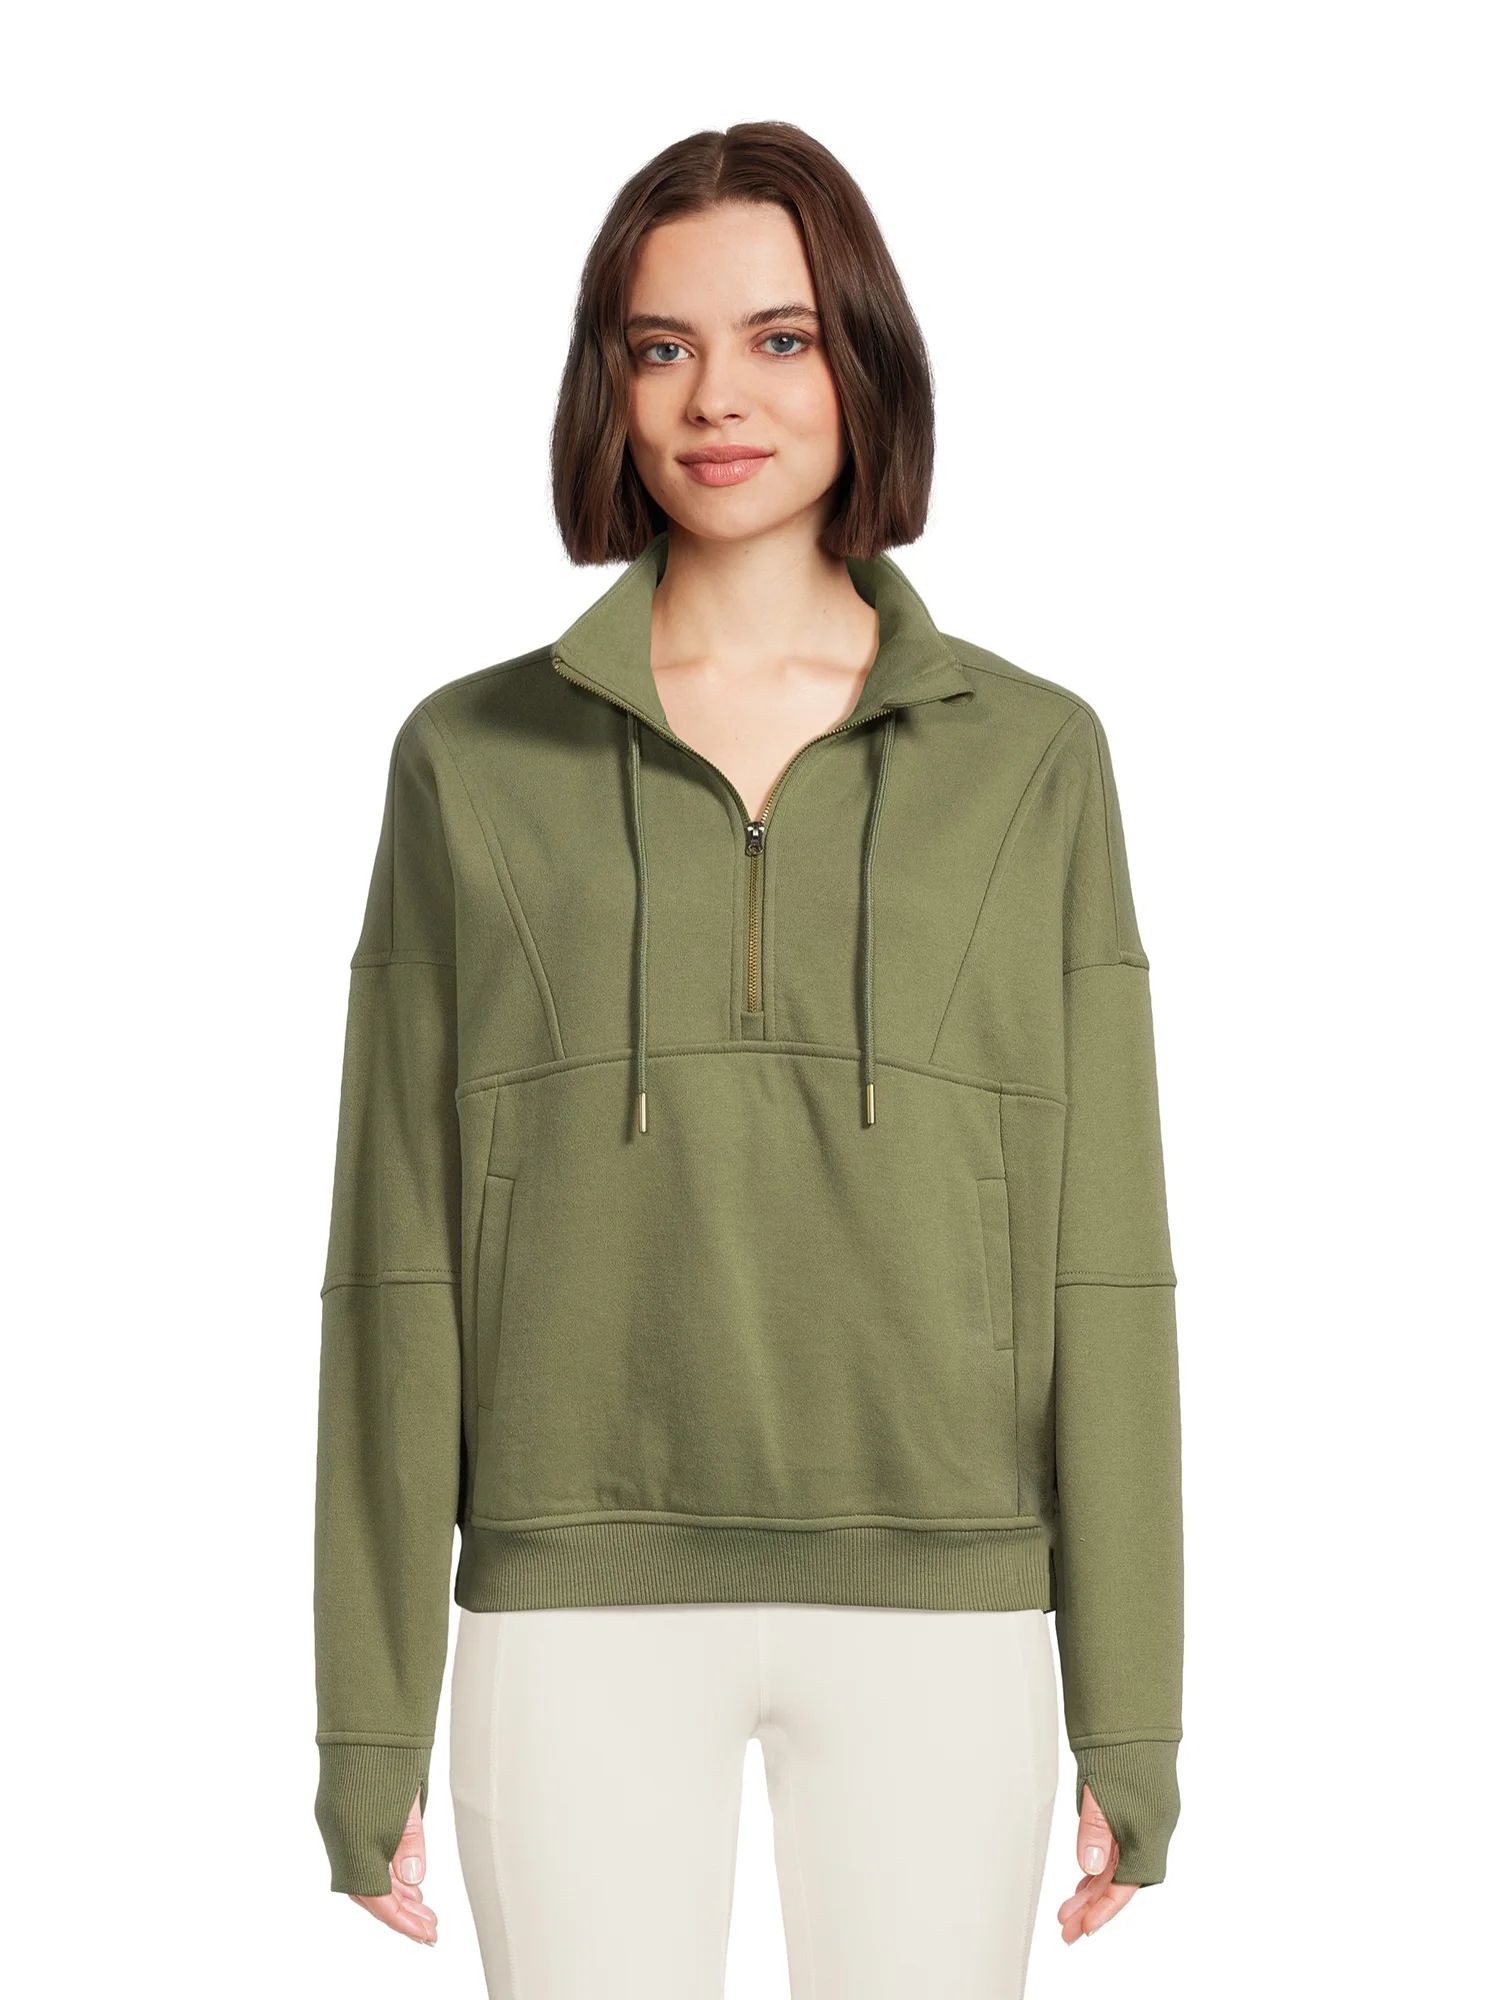 Avia Women's Quarter Zip Pullover, Sizes XS-XXXL | Walmart (US)